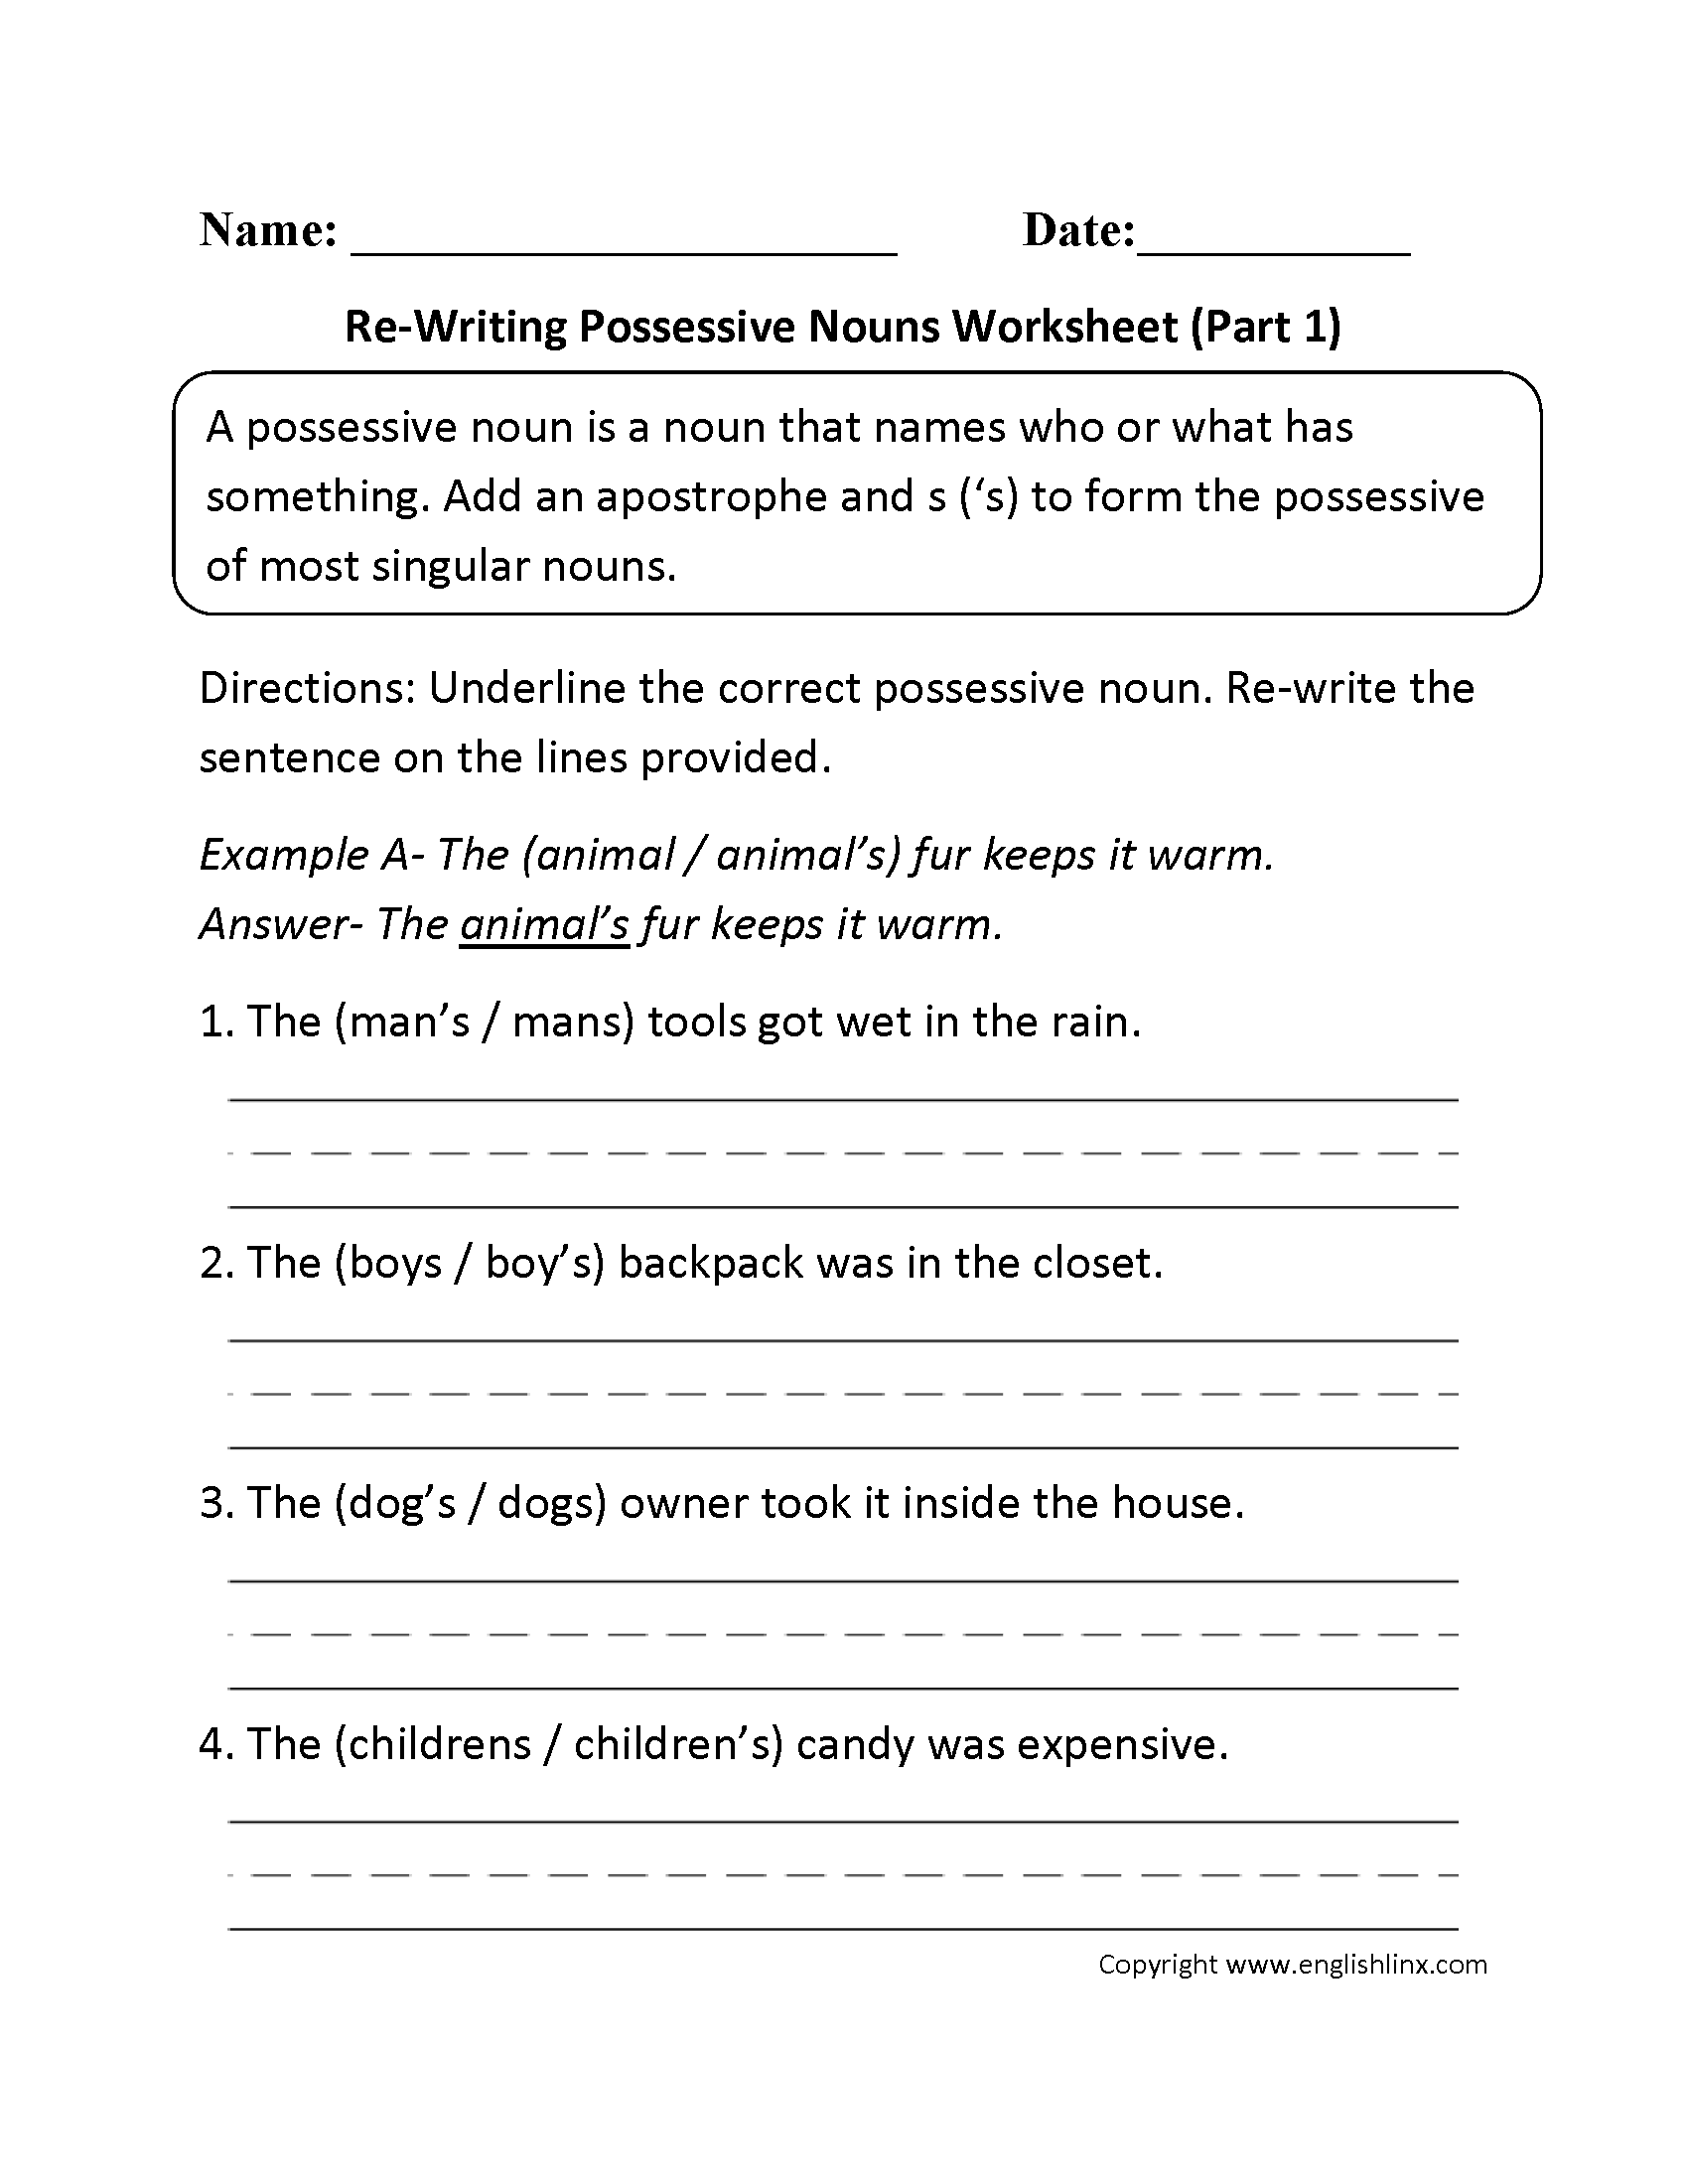 Possessive Nouns Worksheets Re Writing Possessive Nouns Worksheet Part 1